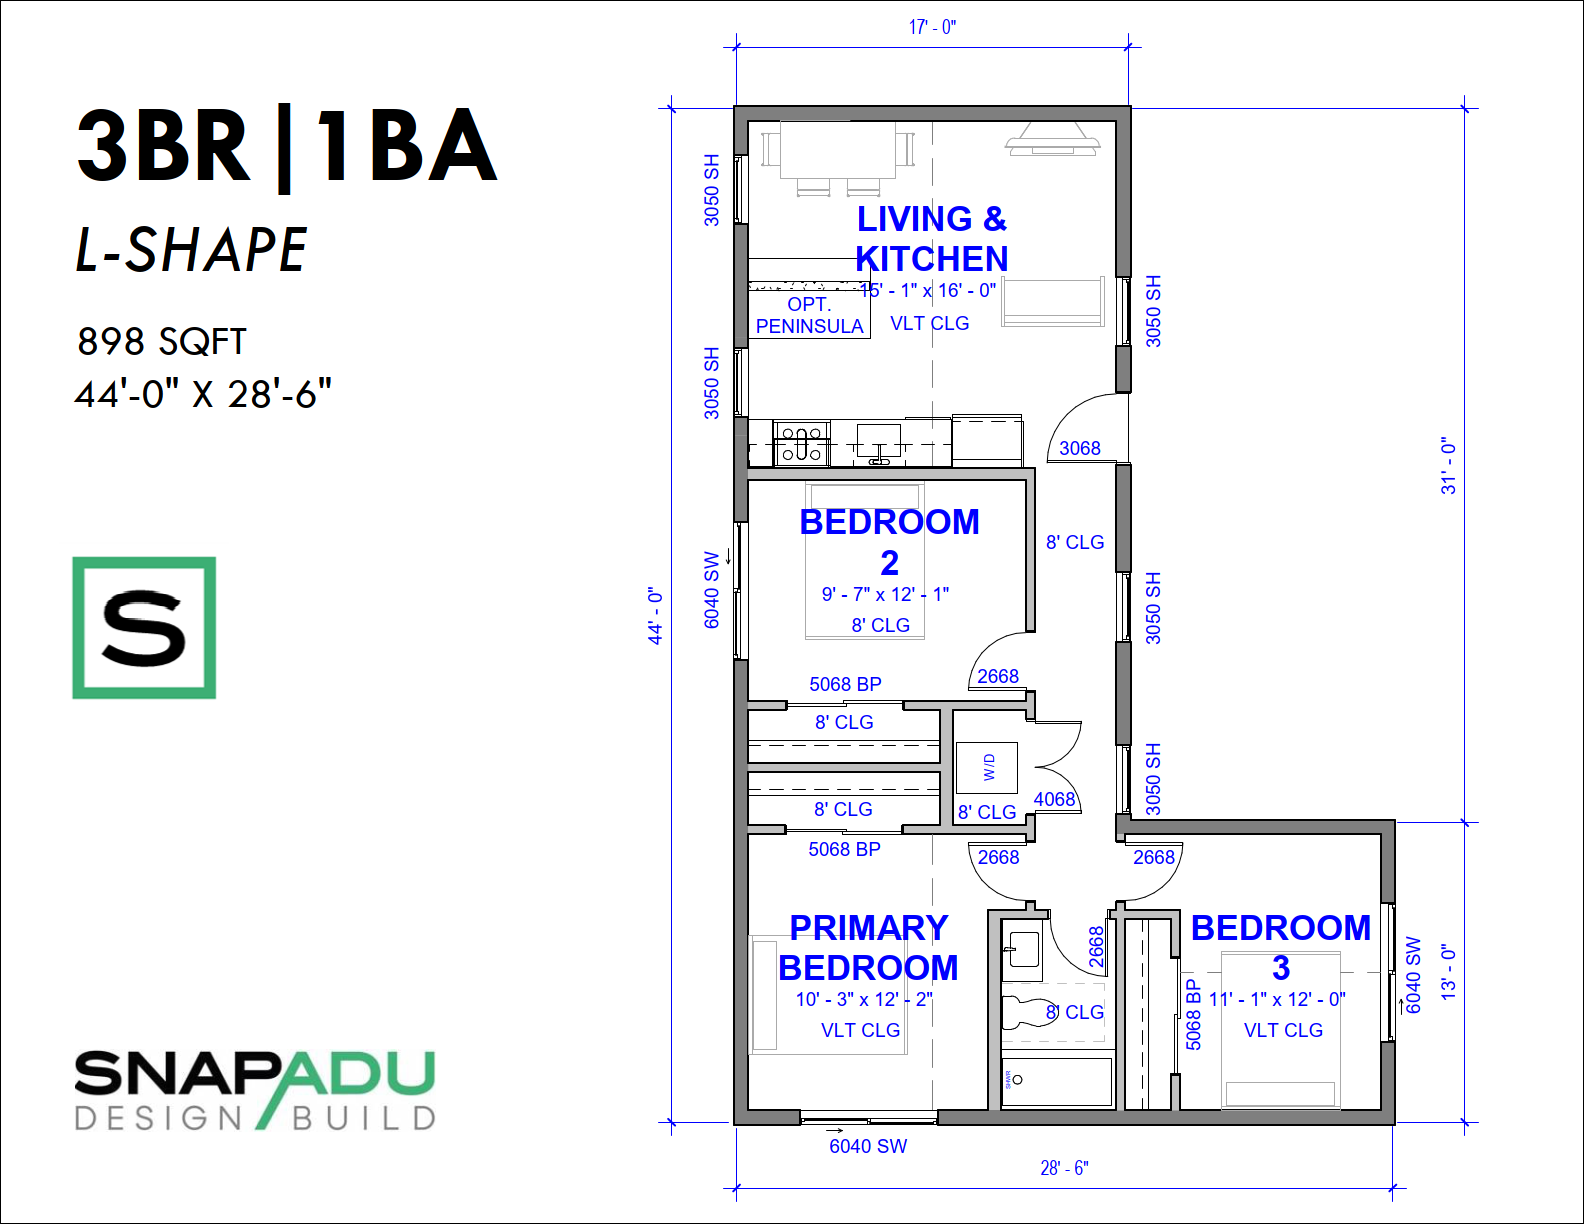 3BR 1BA 898 SF 44x29 L-SHAPE Snap ADU Floor Plan 3 Bedroom 900 sqft